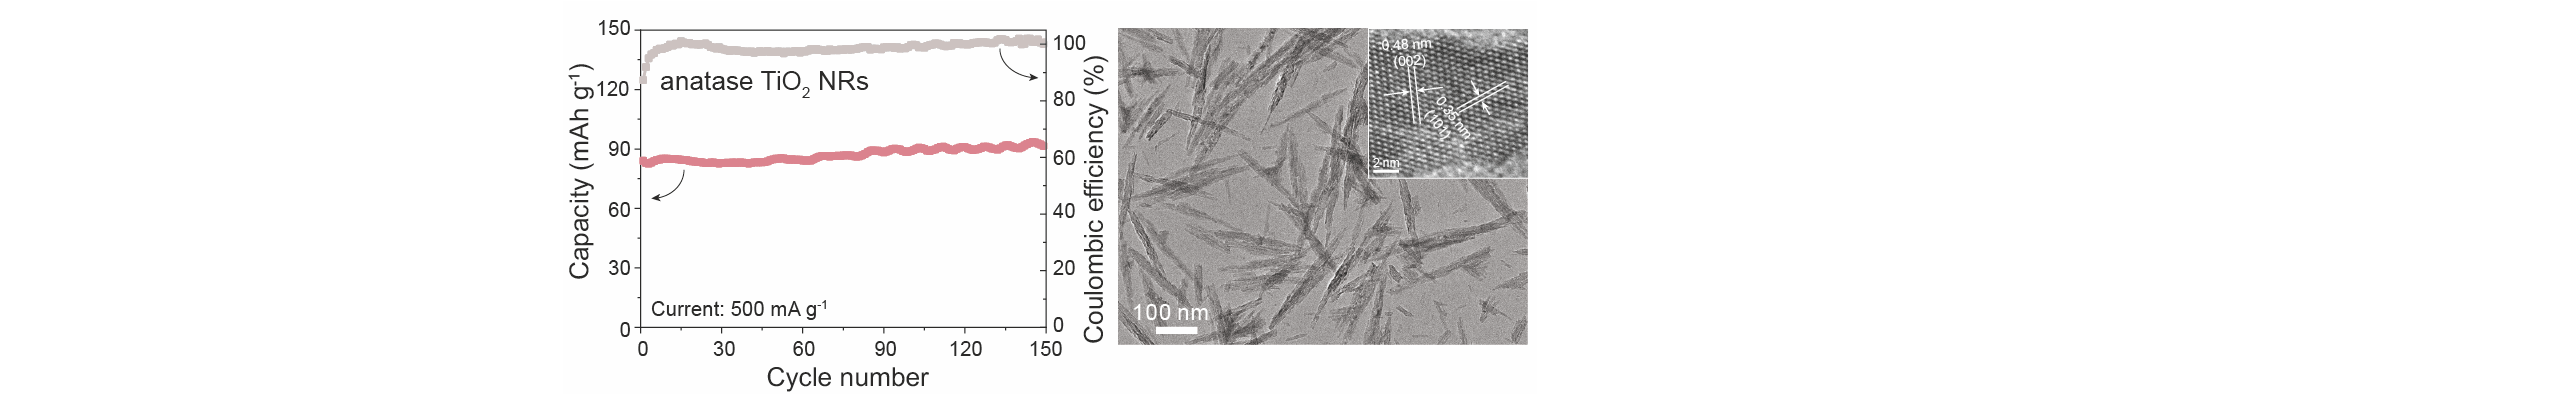 Anatase TiO2 Nanorods as Cathode Materials for Aluminum-Ion Batteries